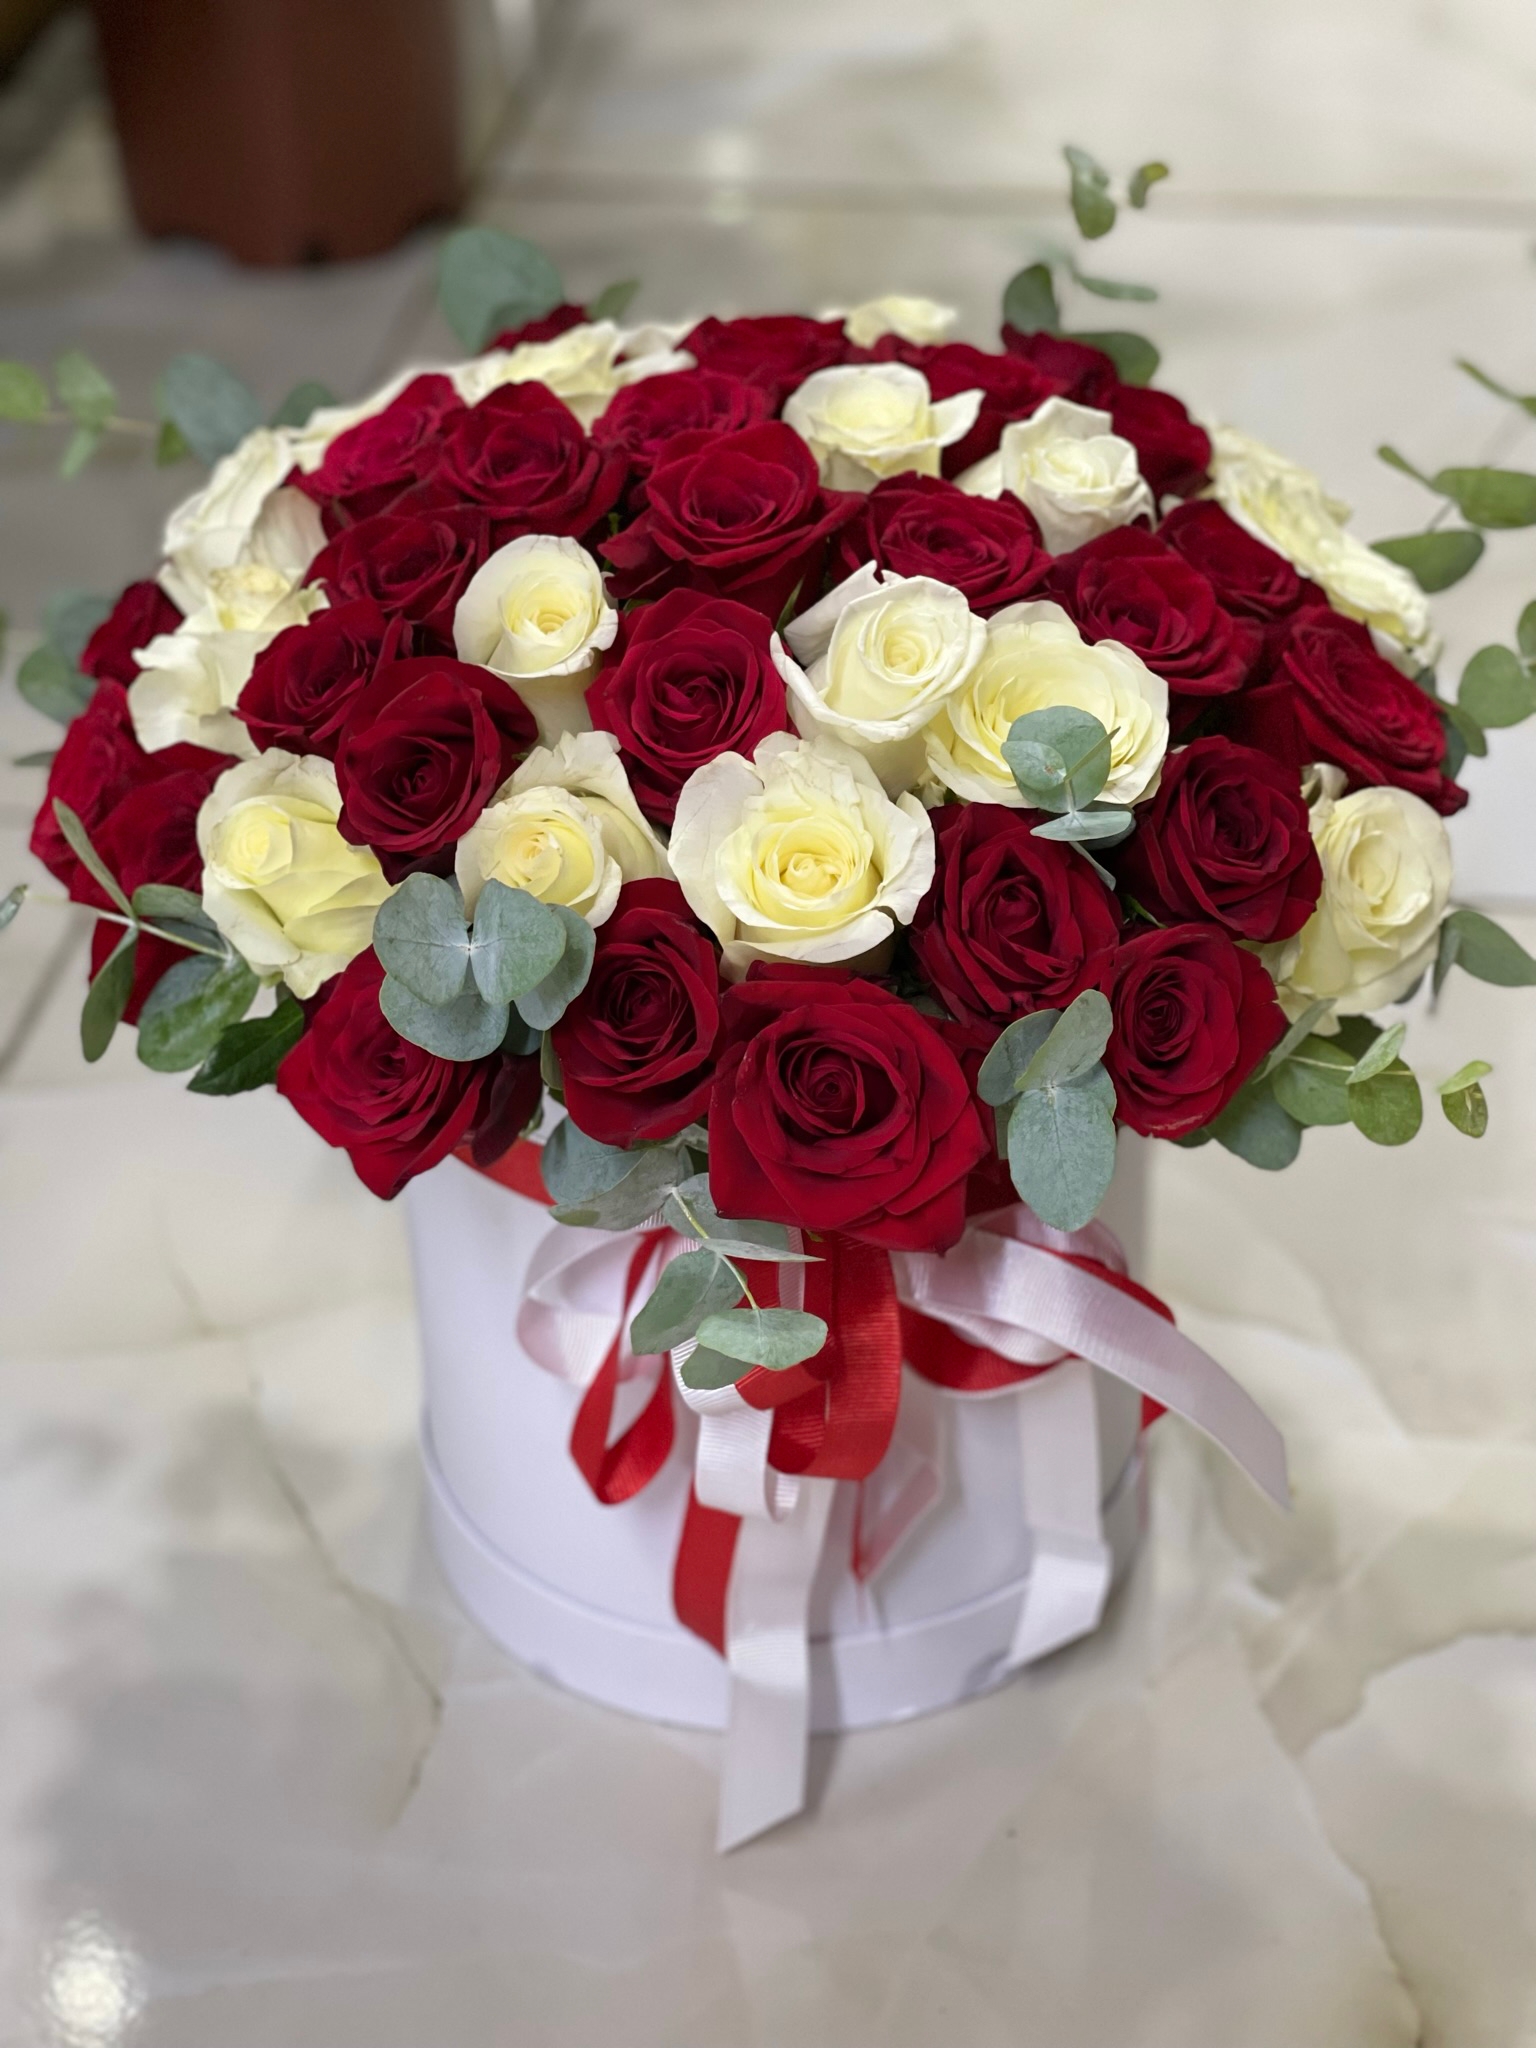  Kemer Florist 51 Pcs Imported White & Red Roses 